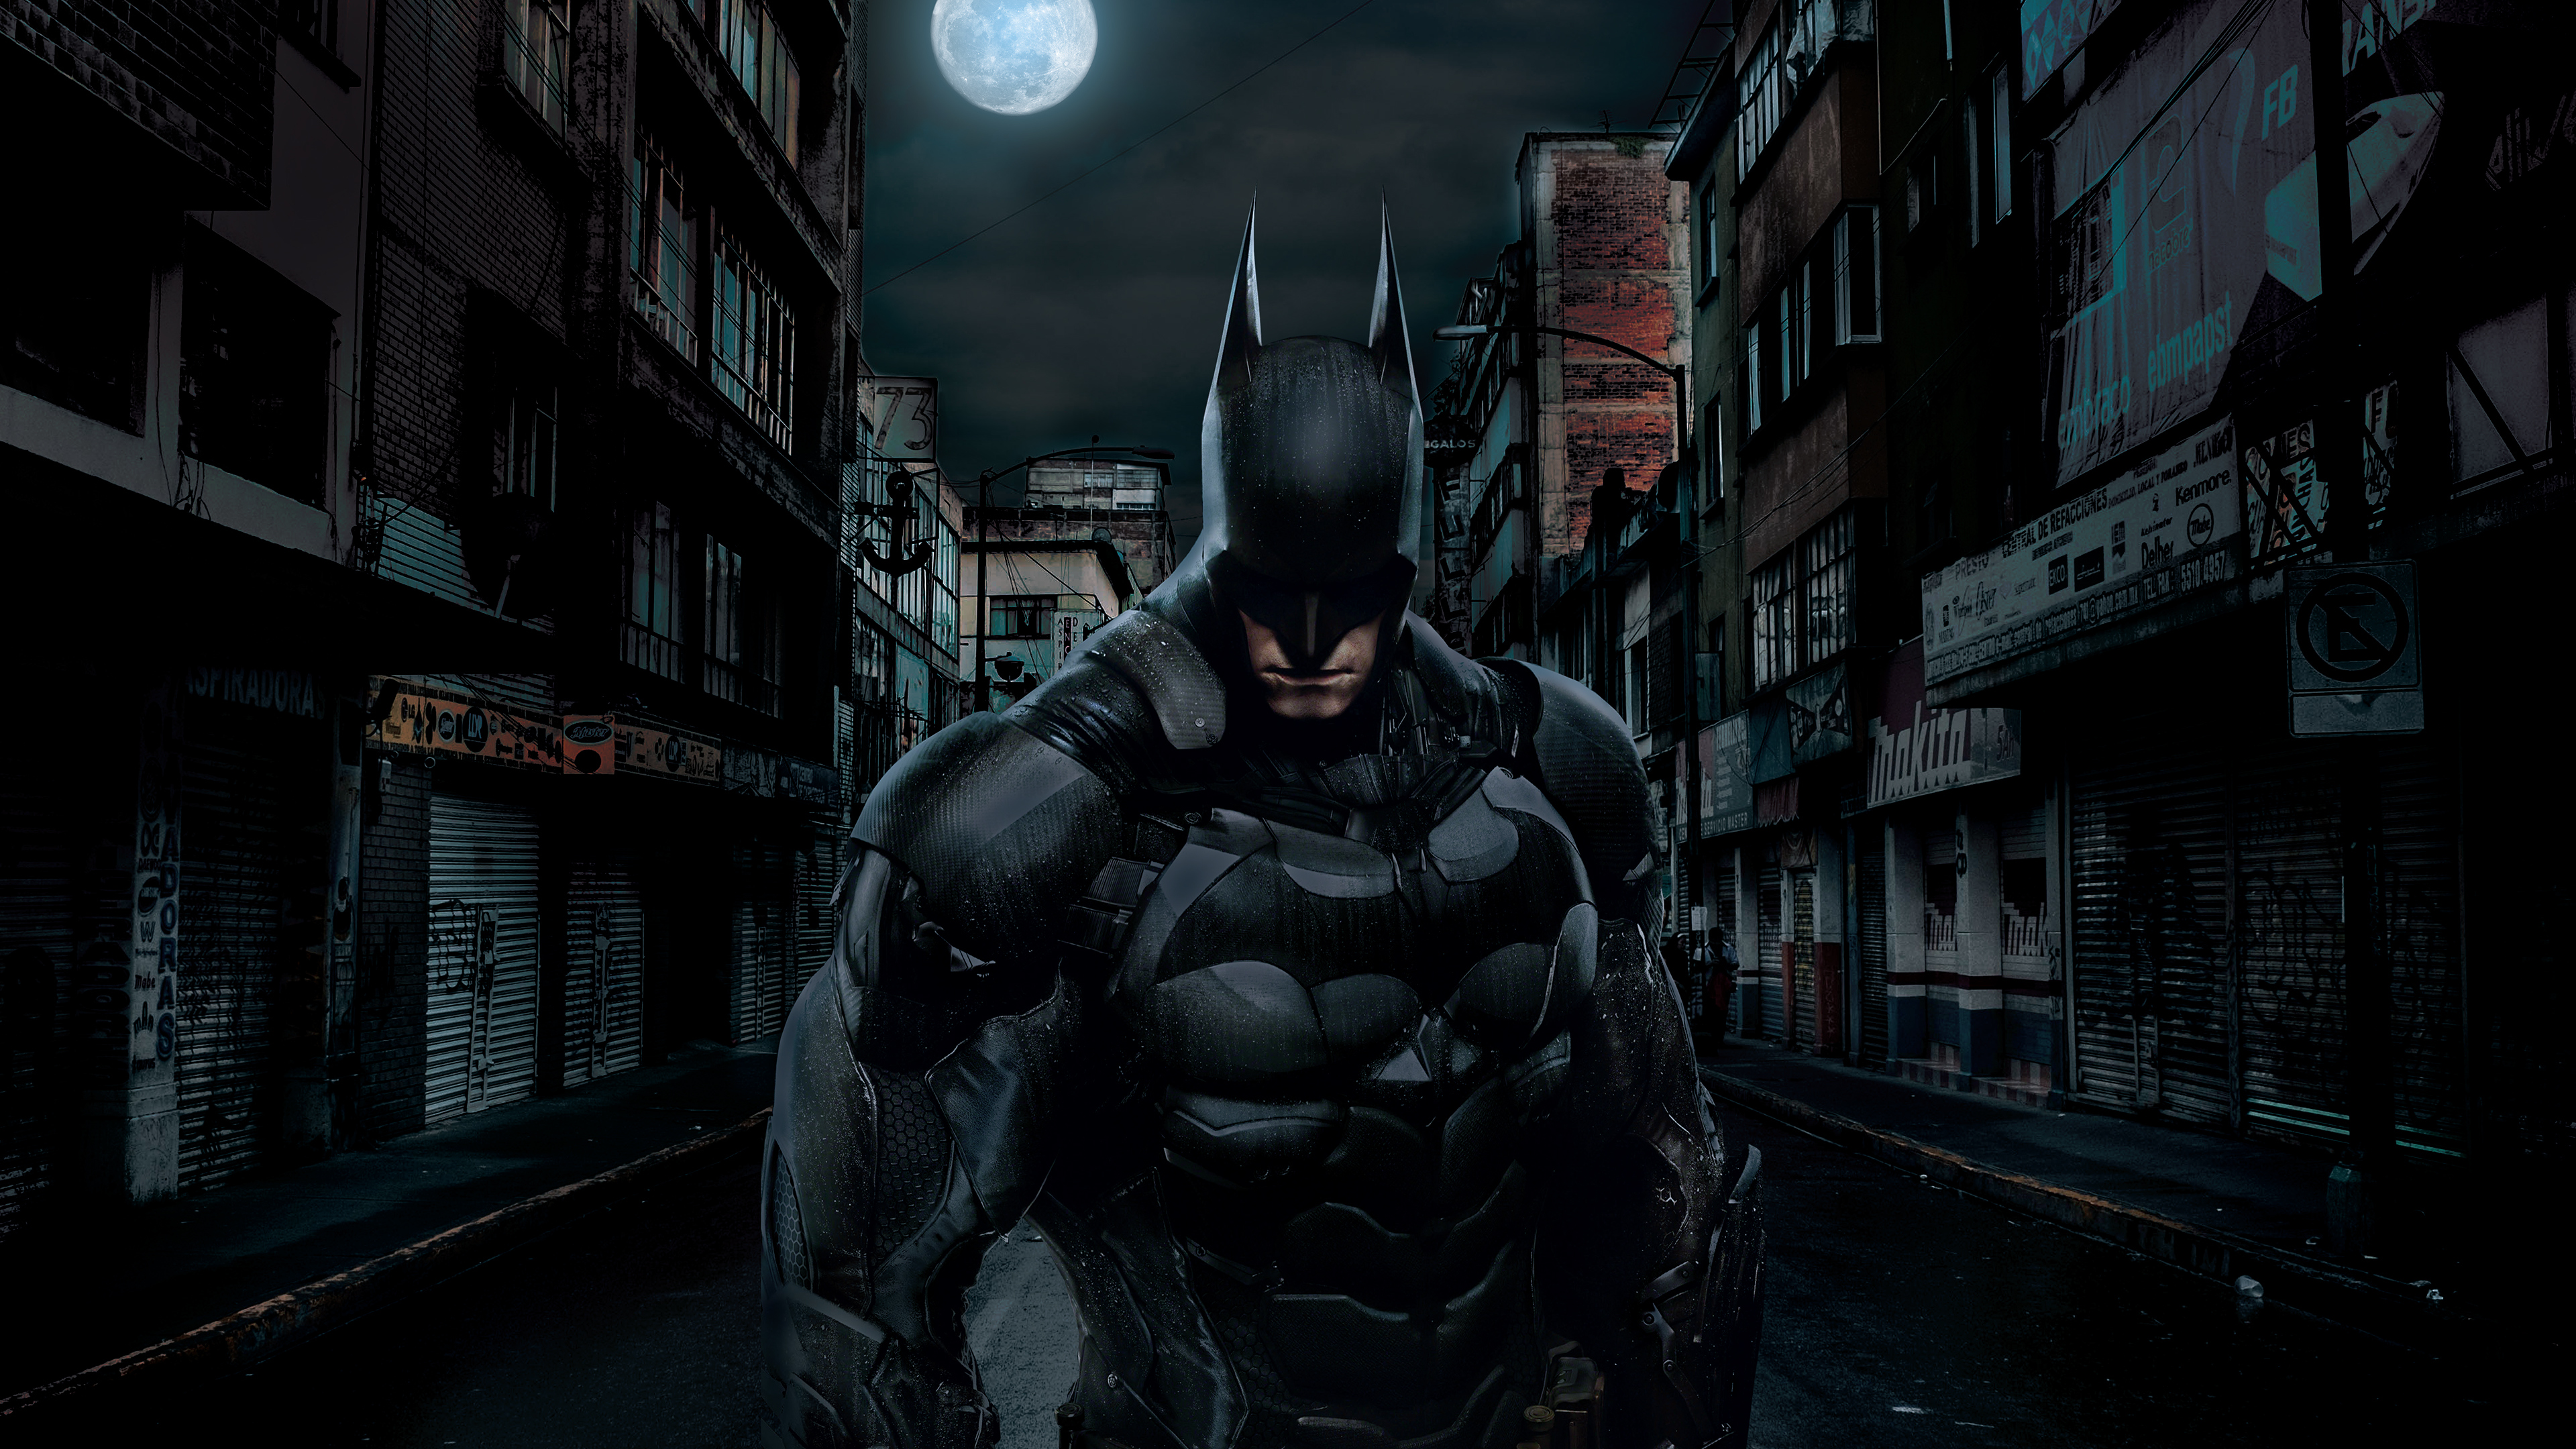  4k  Batman  superheroes wallpapers  hd wallpapers  digital 